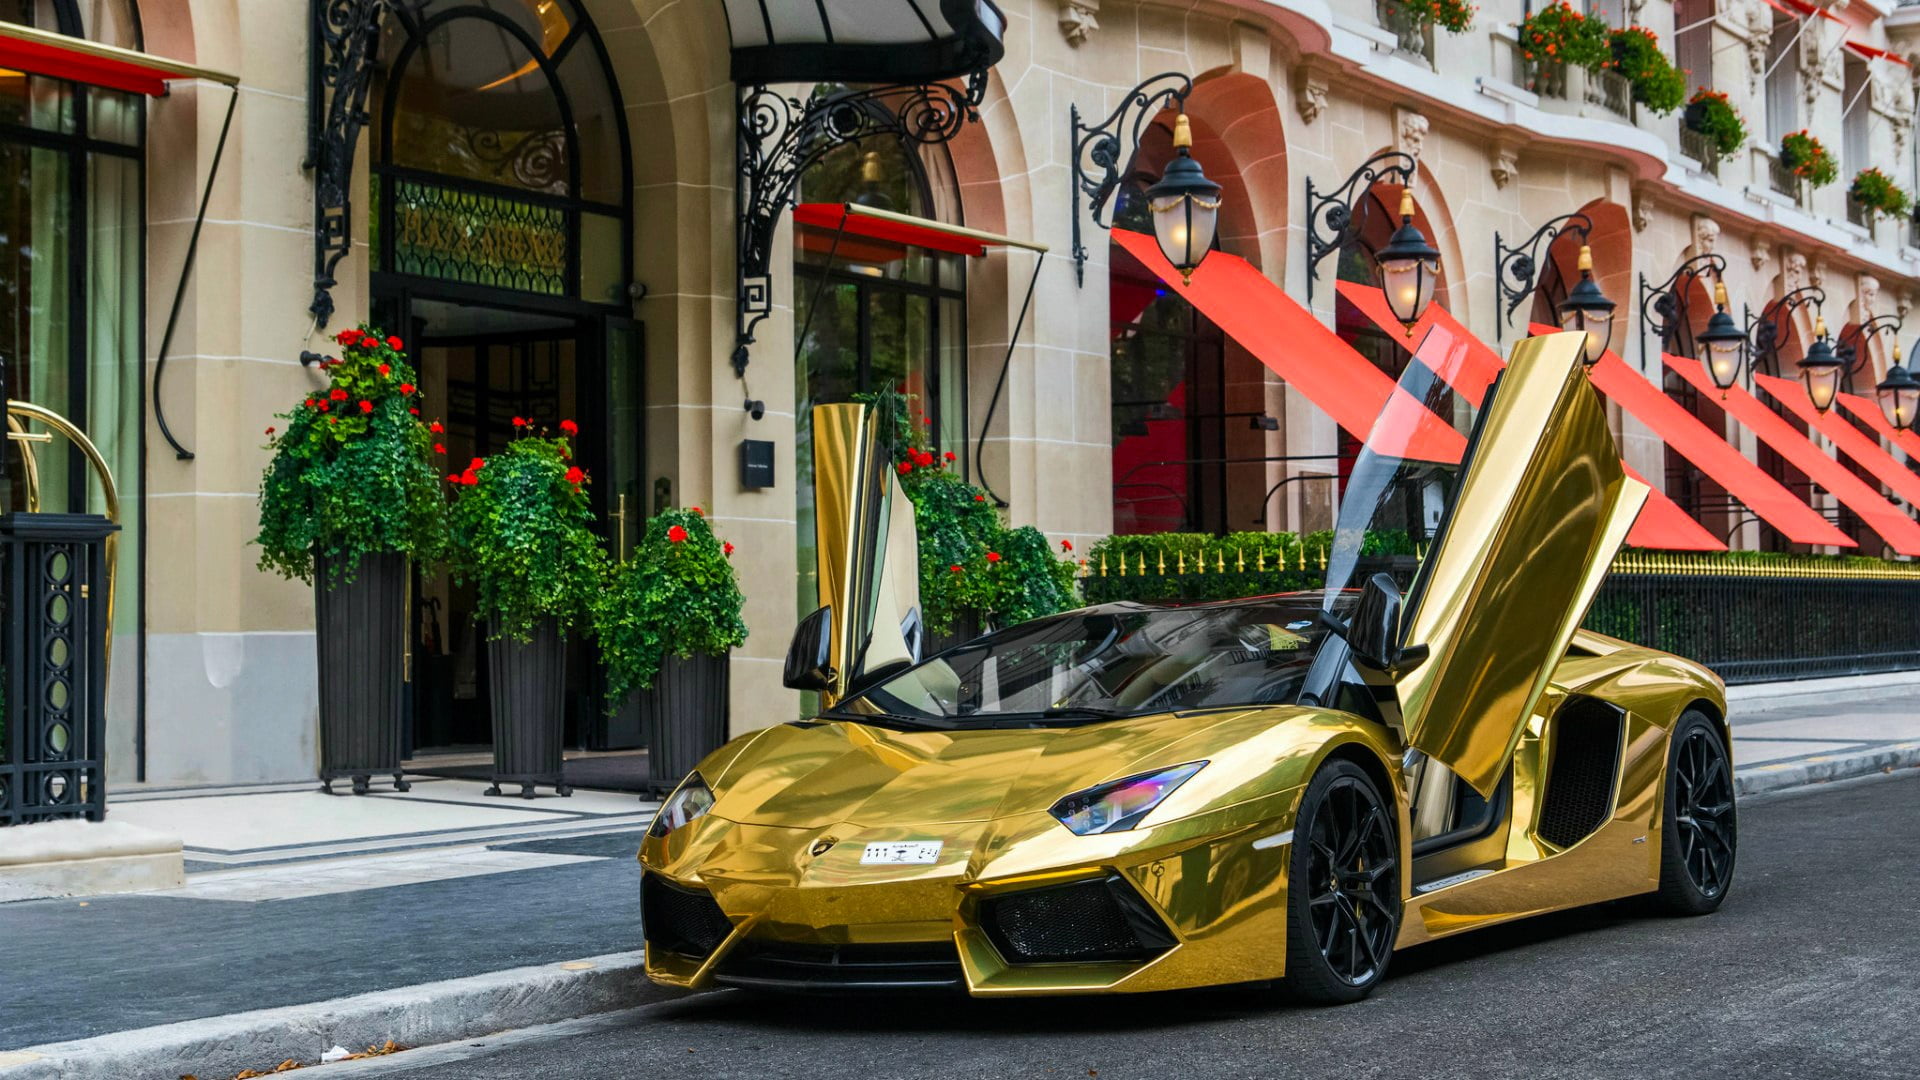 Gold Lamborghini Miami, day, building, lamborghini, building exterior